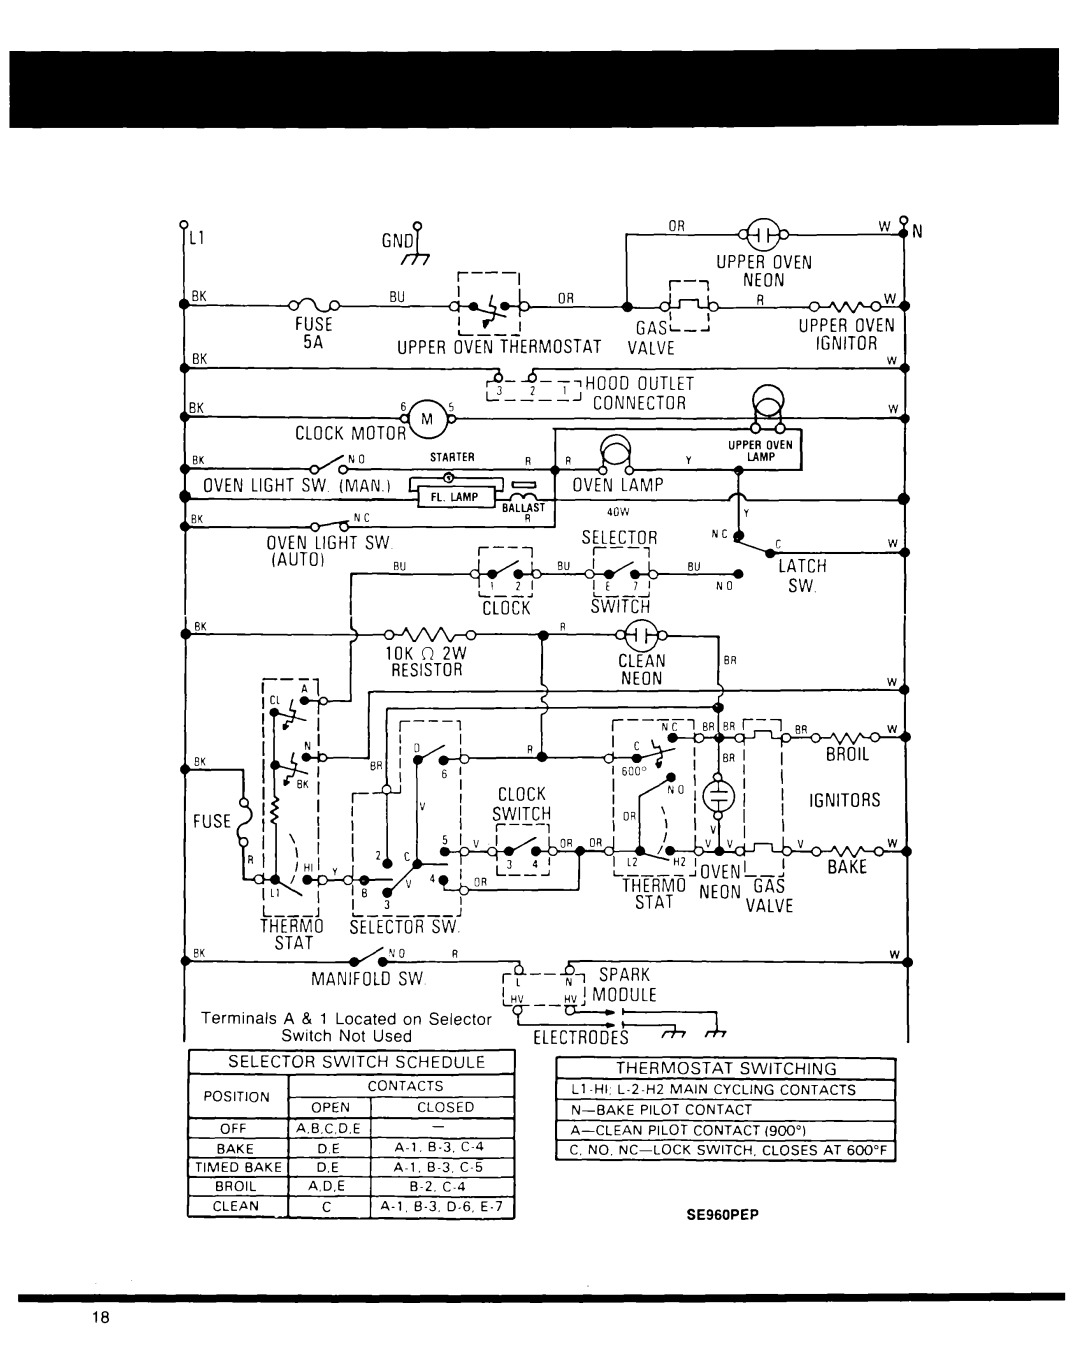 Whirlpool Microwave Oven manual y&-r, 7 J” 